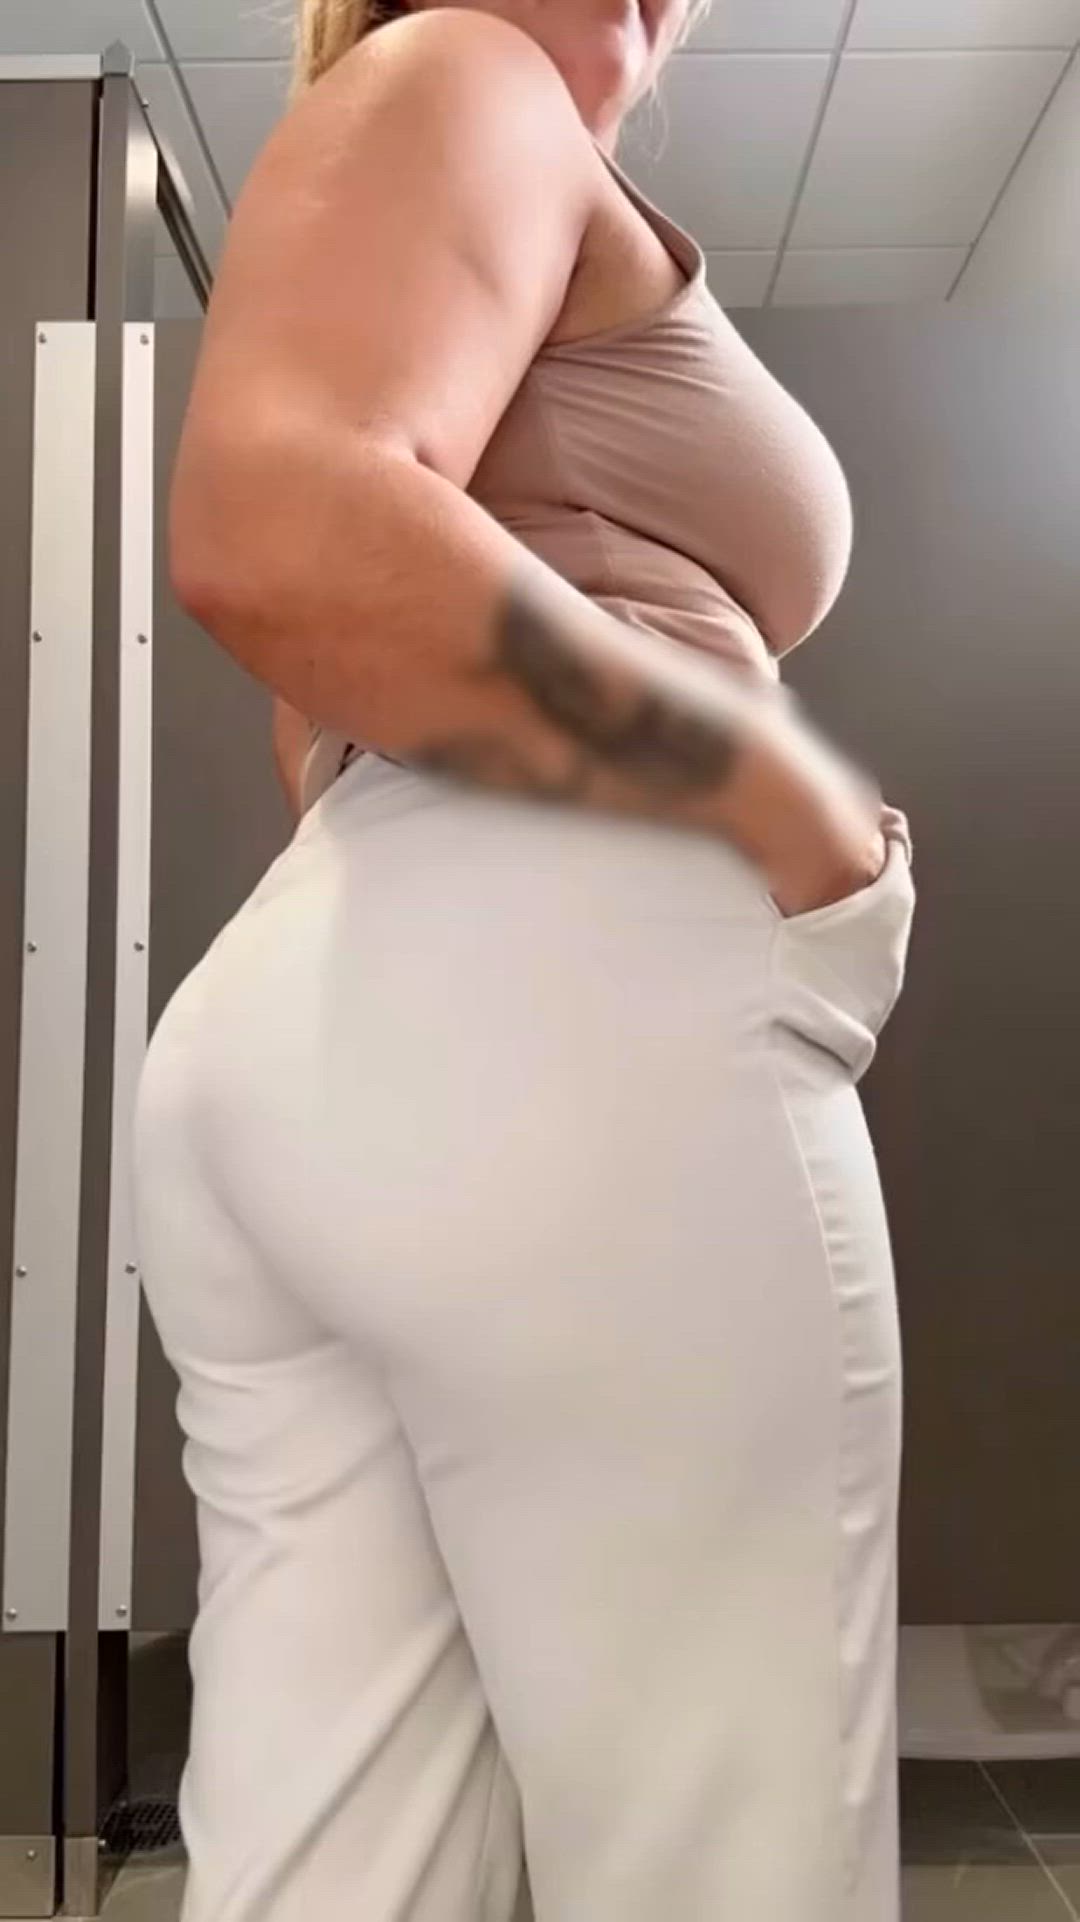 Ass porn video with onlyfans model massandlau <strong>@massandlau</strong>